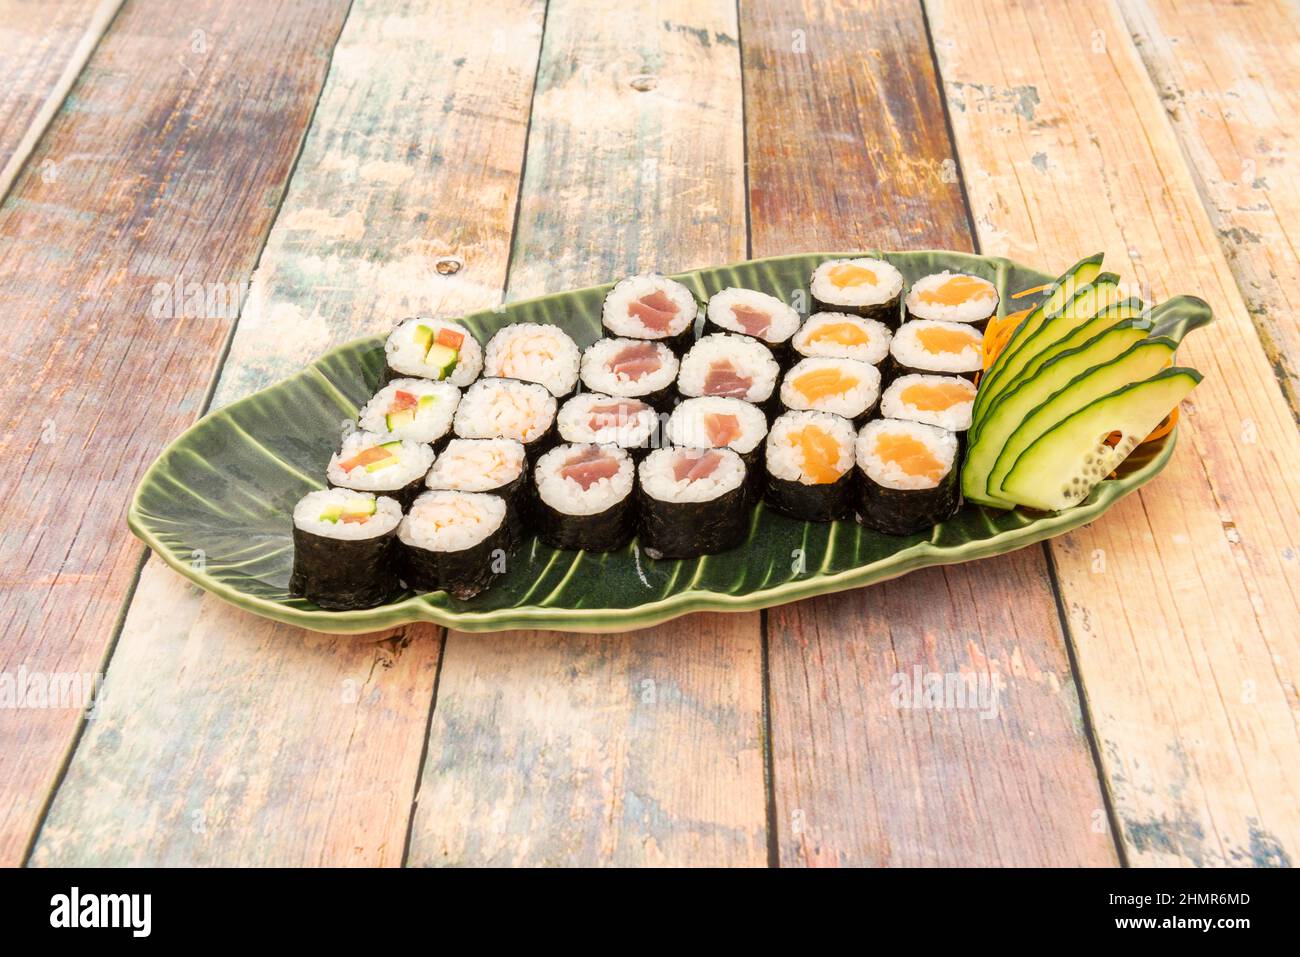 416 Bamboo Sushi Rolling Mat Stock Photos - Free & Royalty-Free